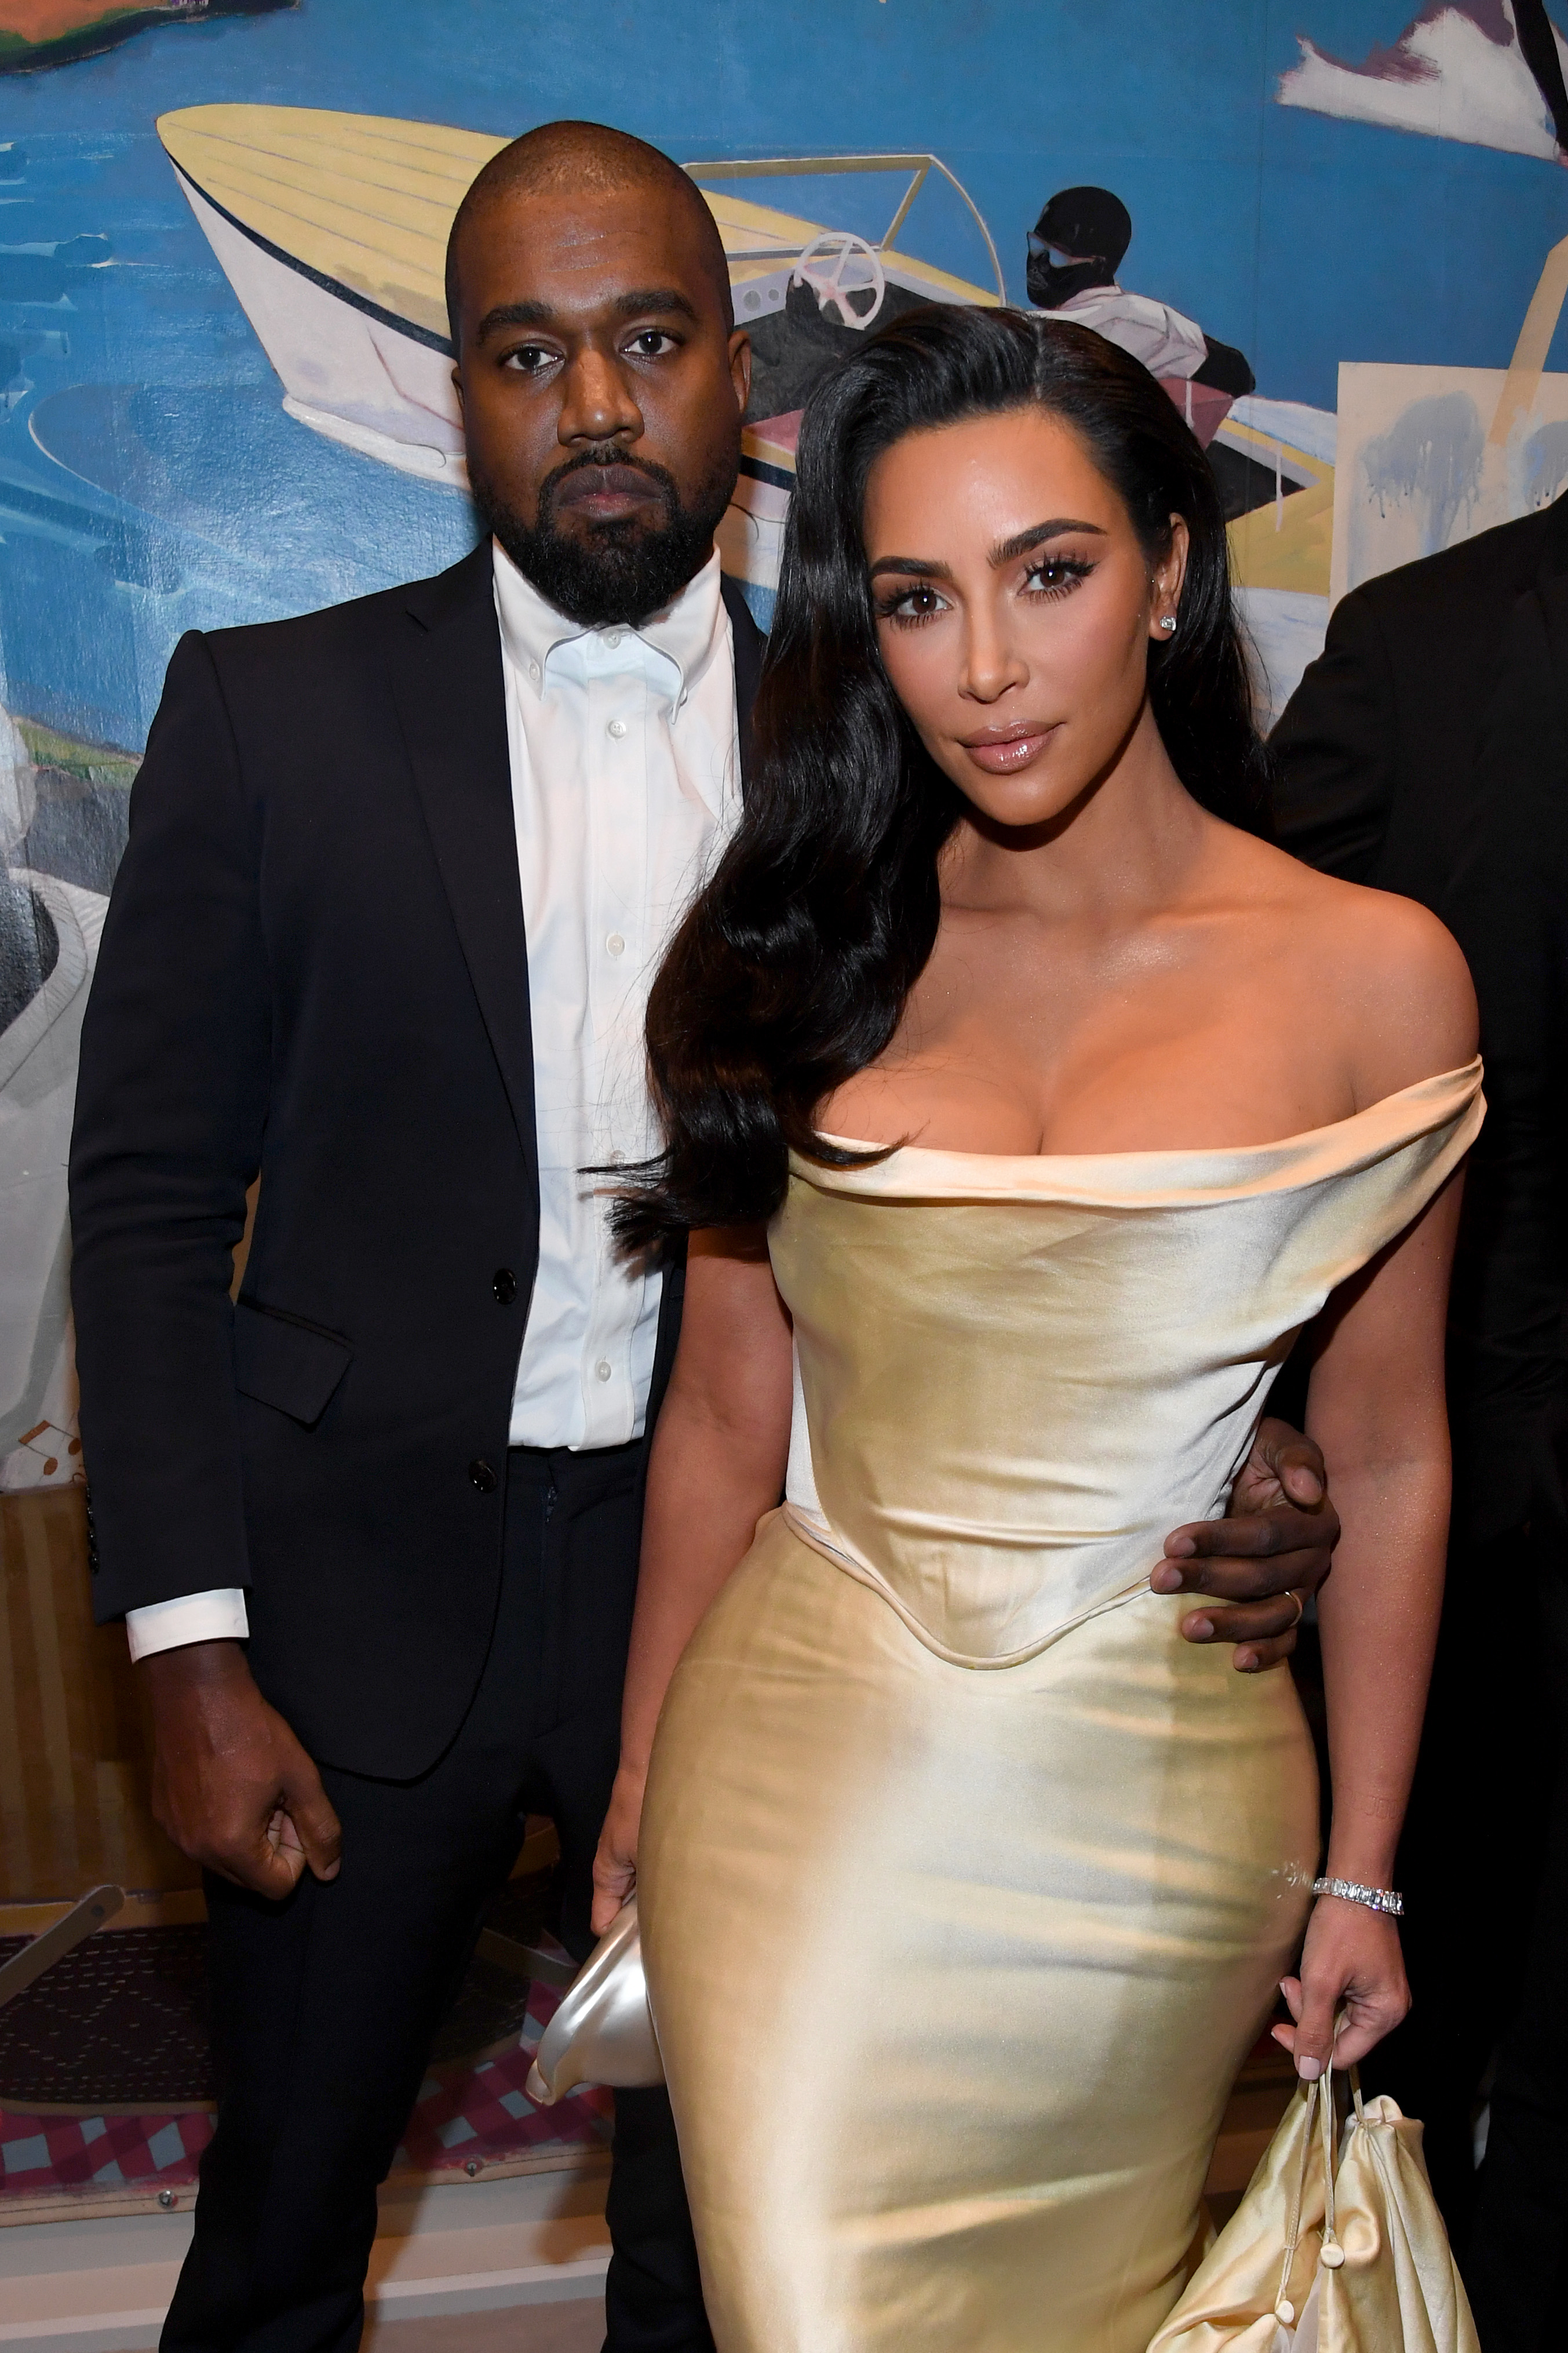 Closeup of Ye and Kim Kardashian